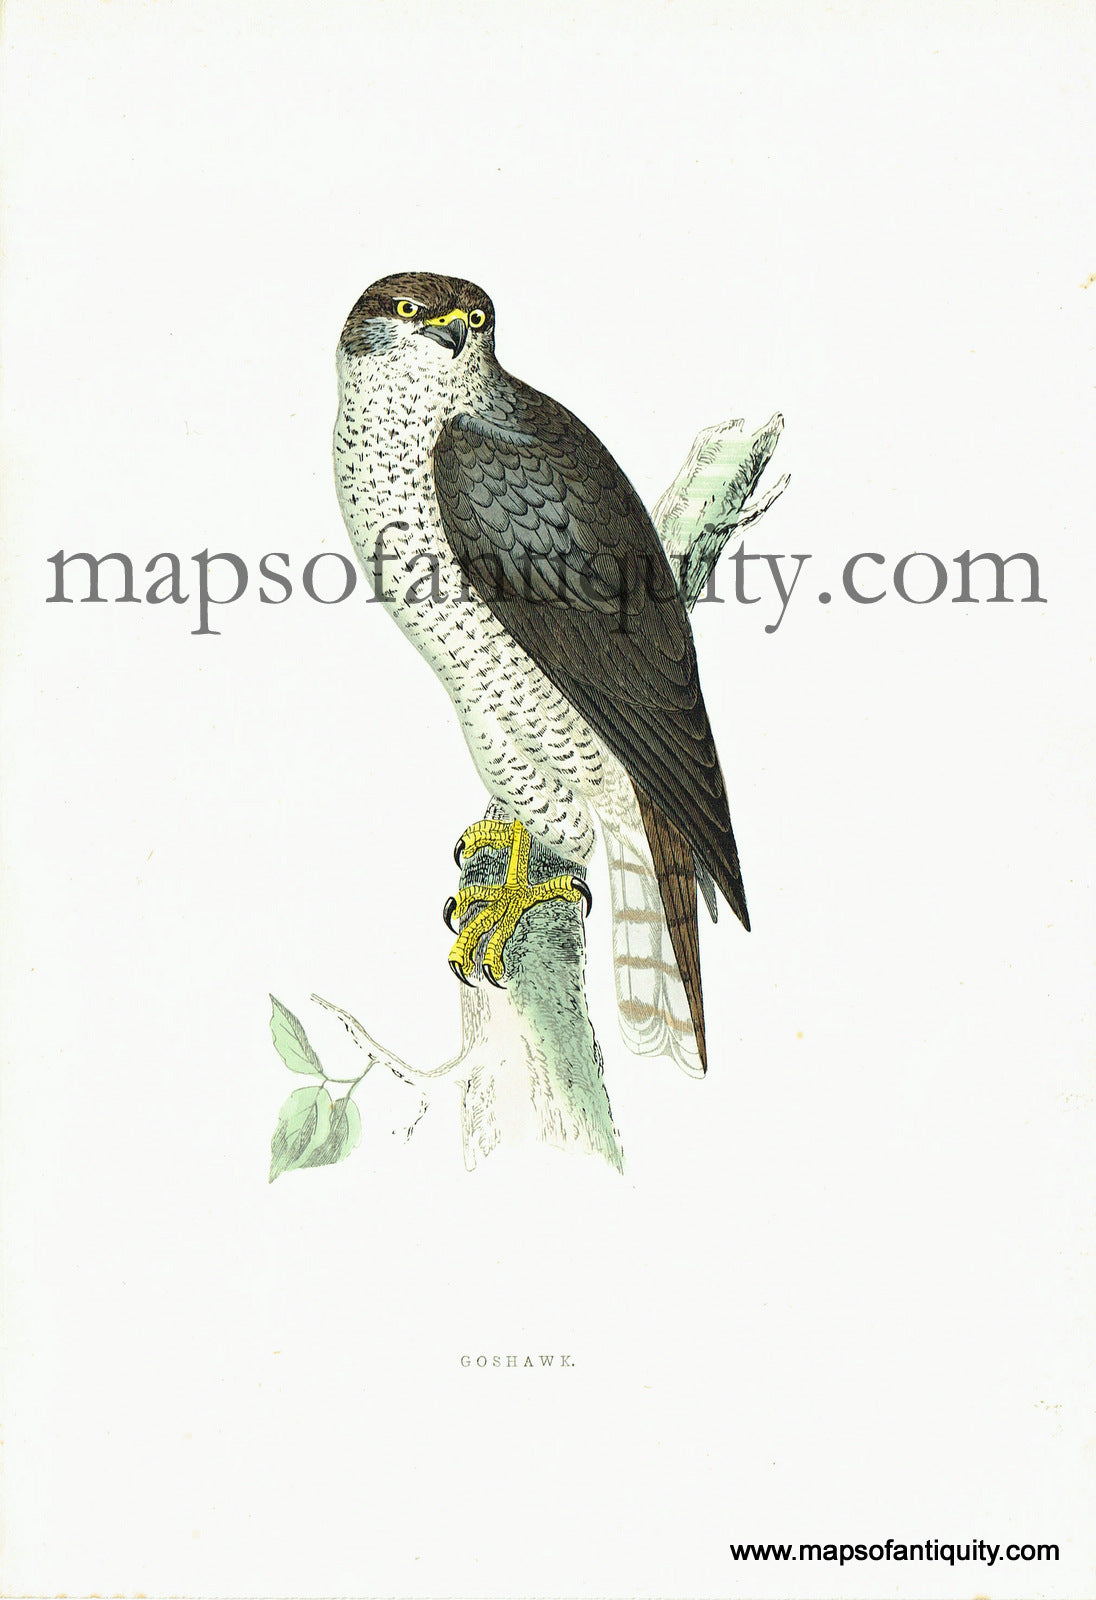 Antique-Hand-Colored-Engraved-Illustration-Goshawk-Antique-Prints-Natural-History-Birds-c.-1860-Morris-Maps-Of-Antiquity